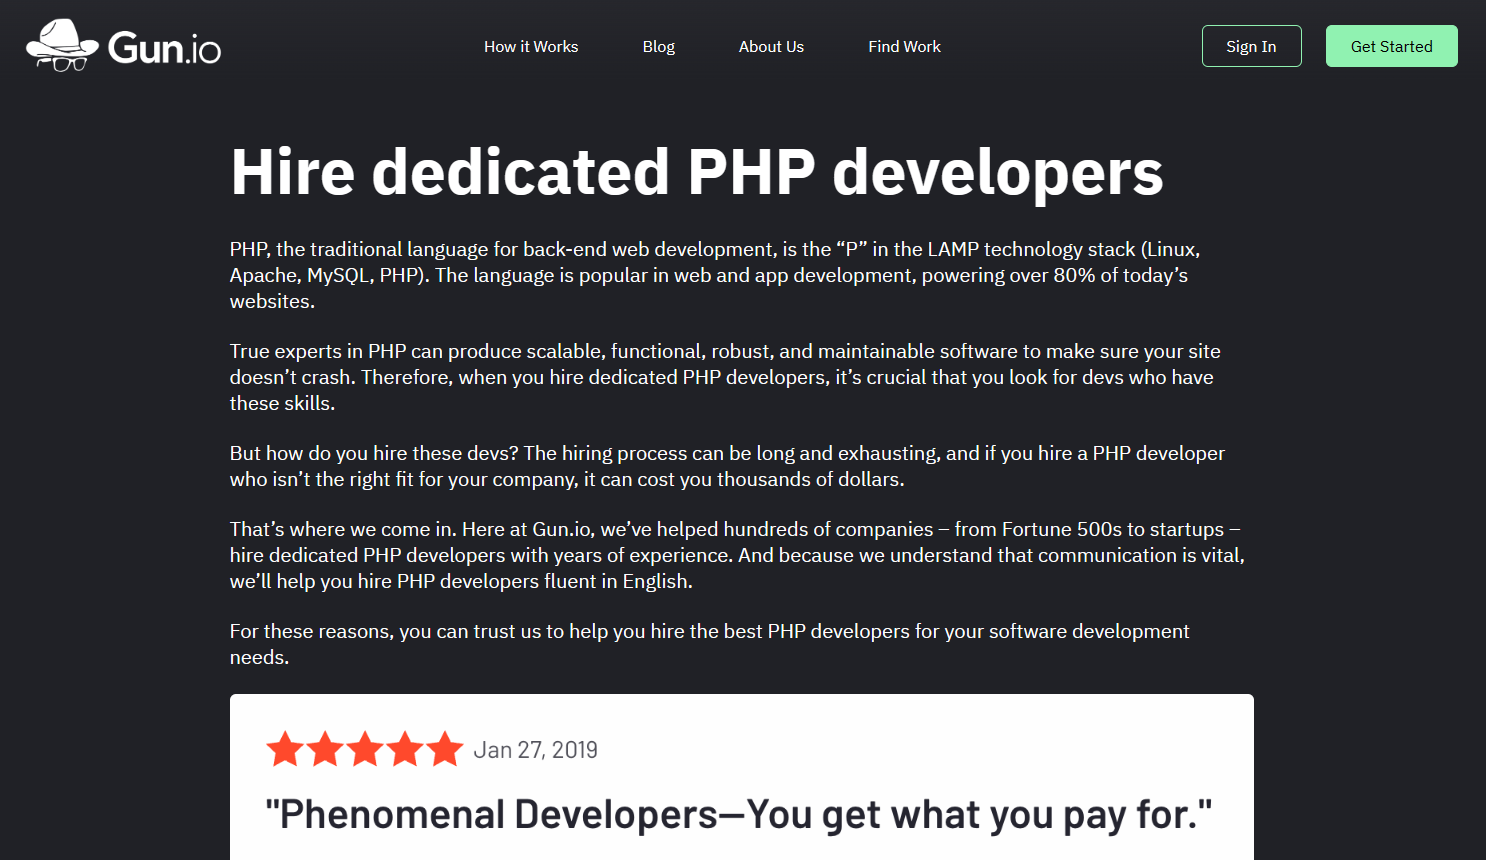 Gun.io - Hire Top PHP developers